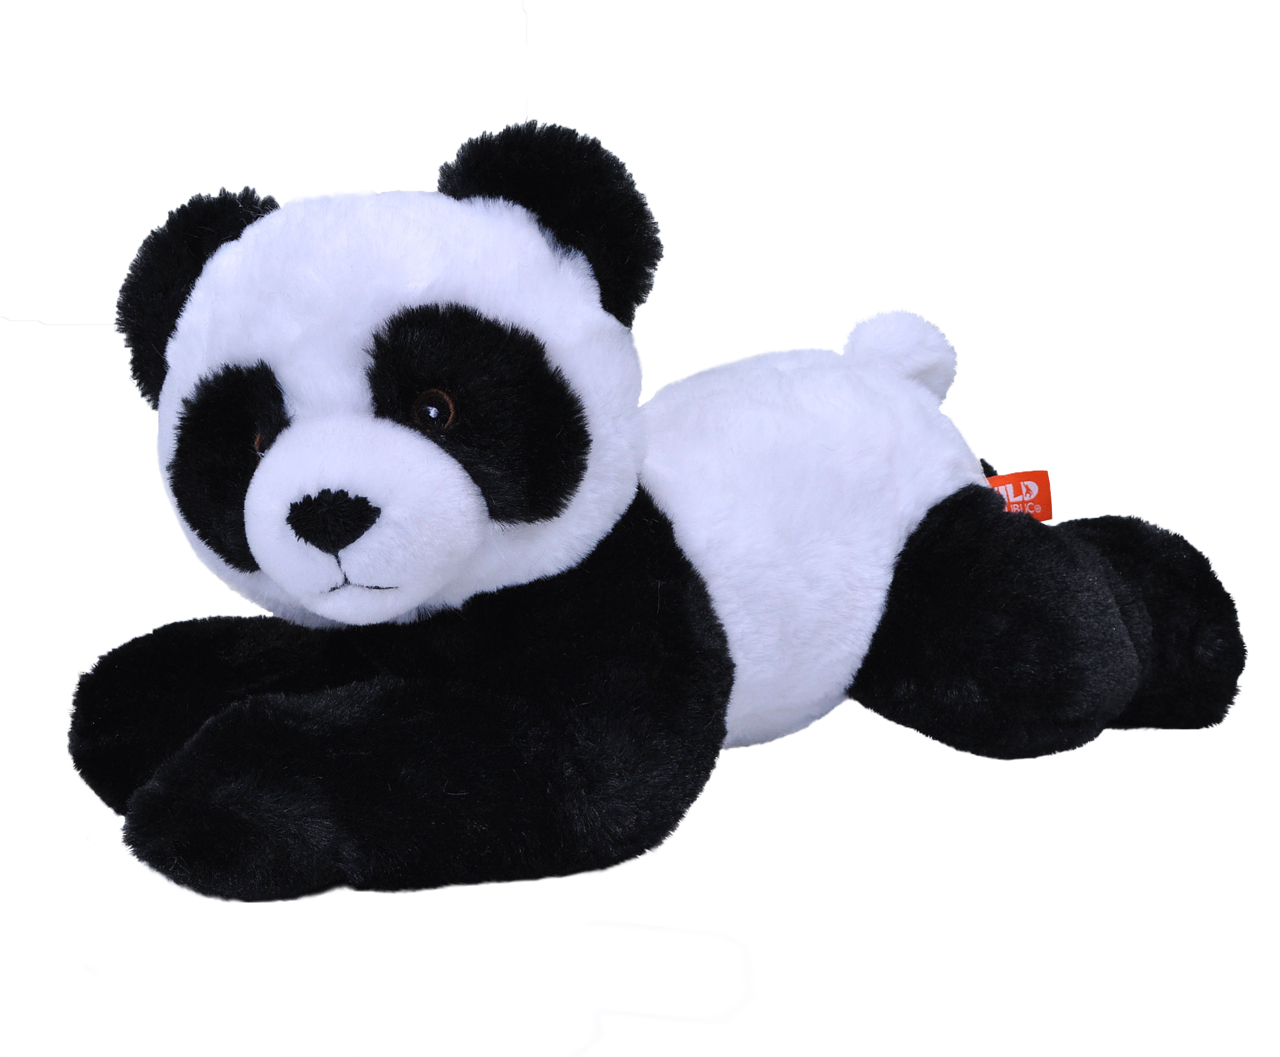 Urs Panda Ecokins - Jucarie Plus Wild Republic 30 cm